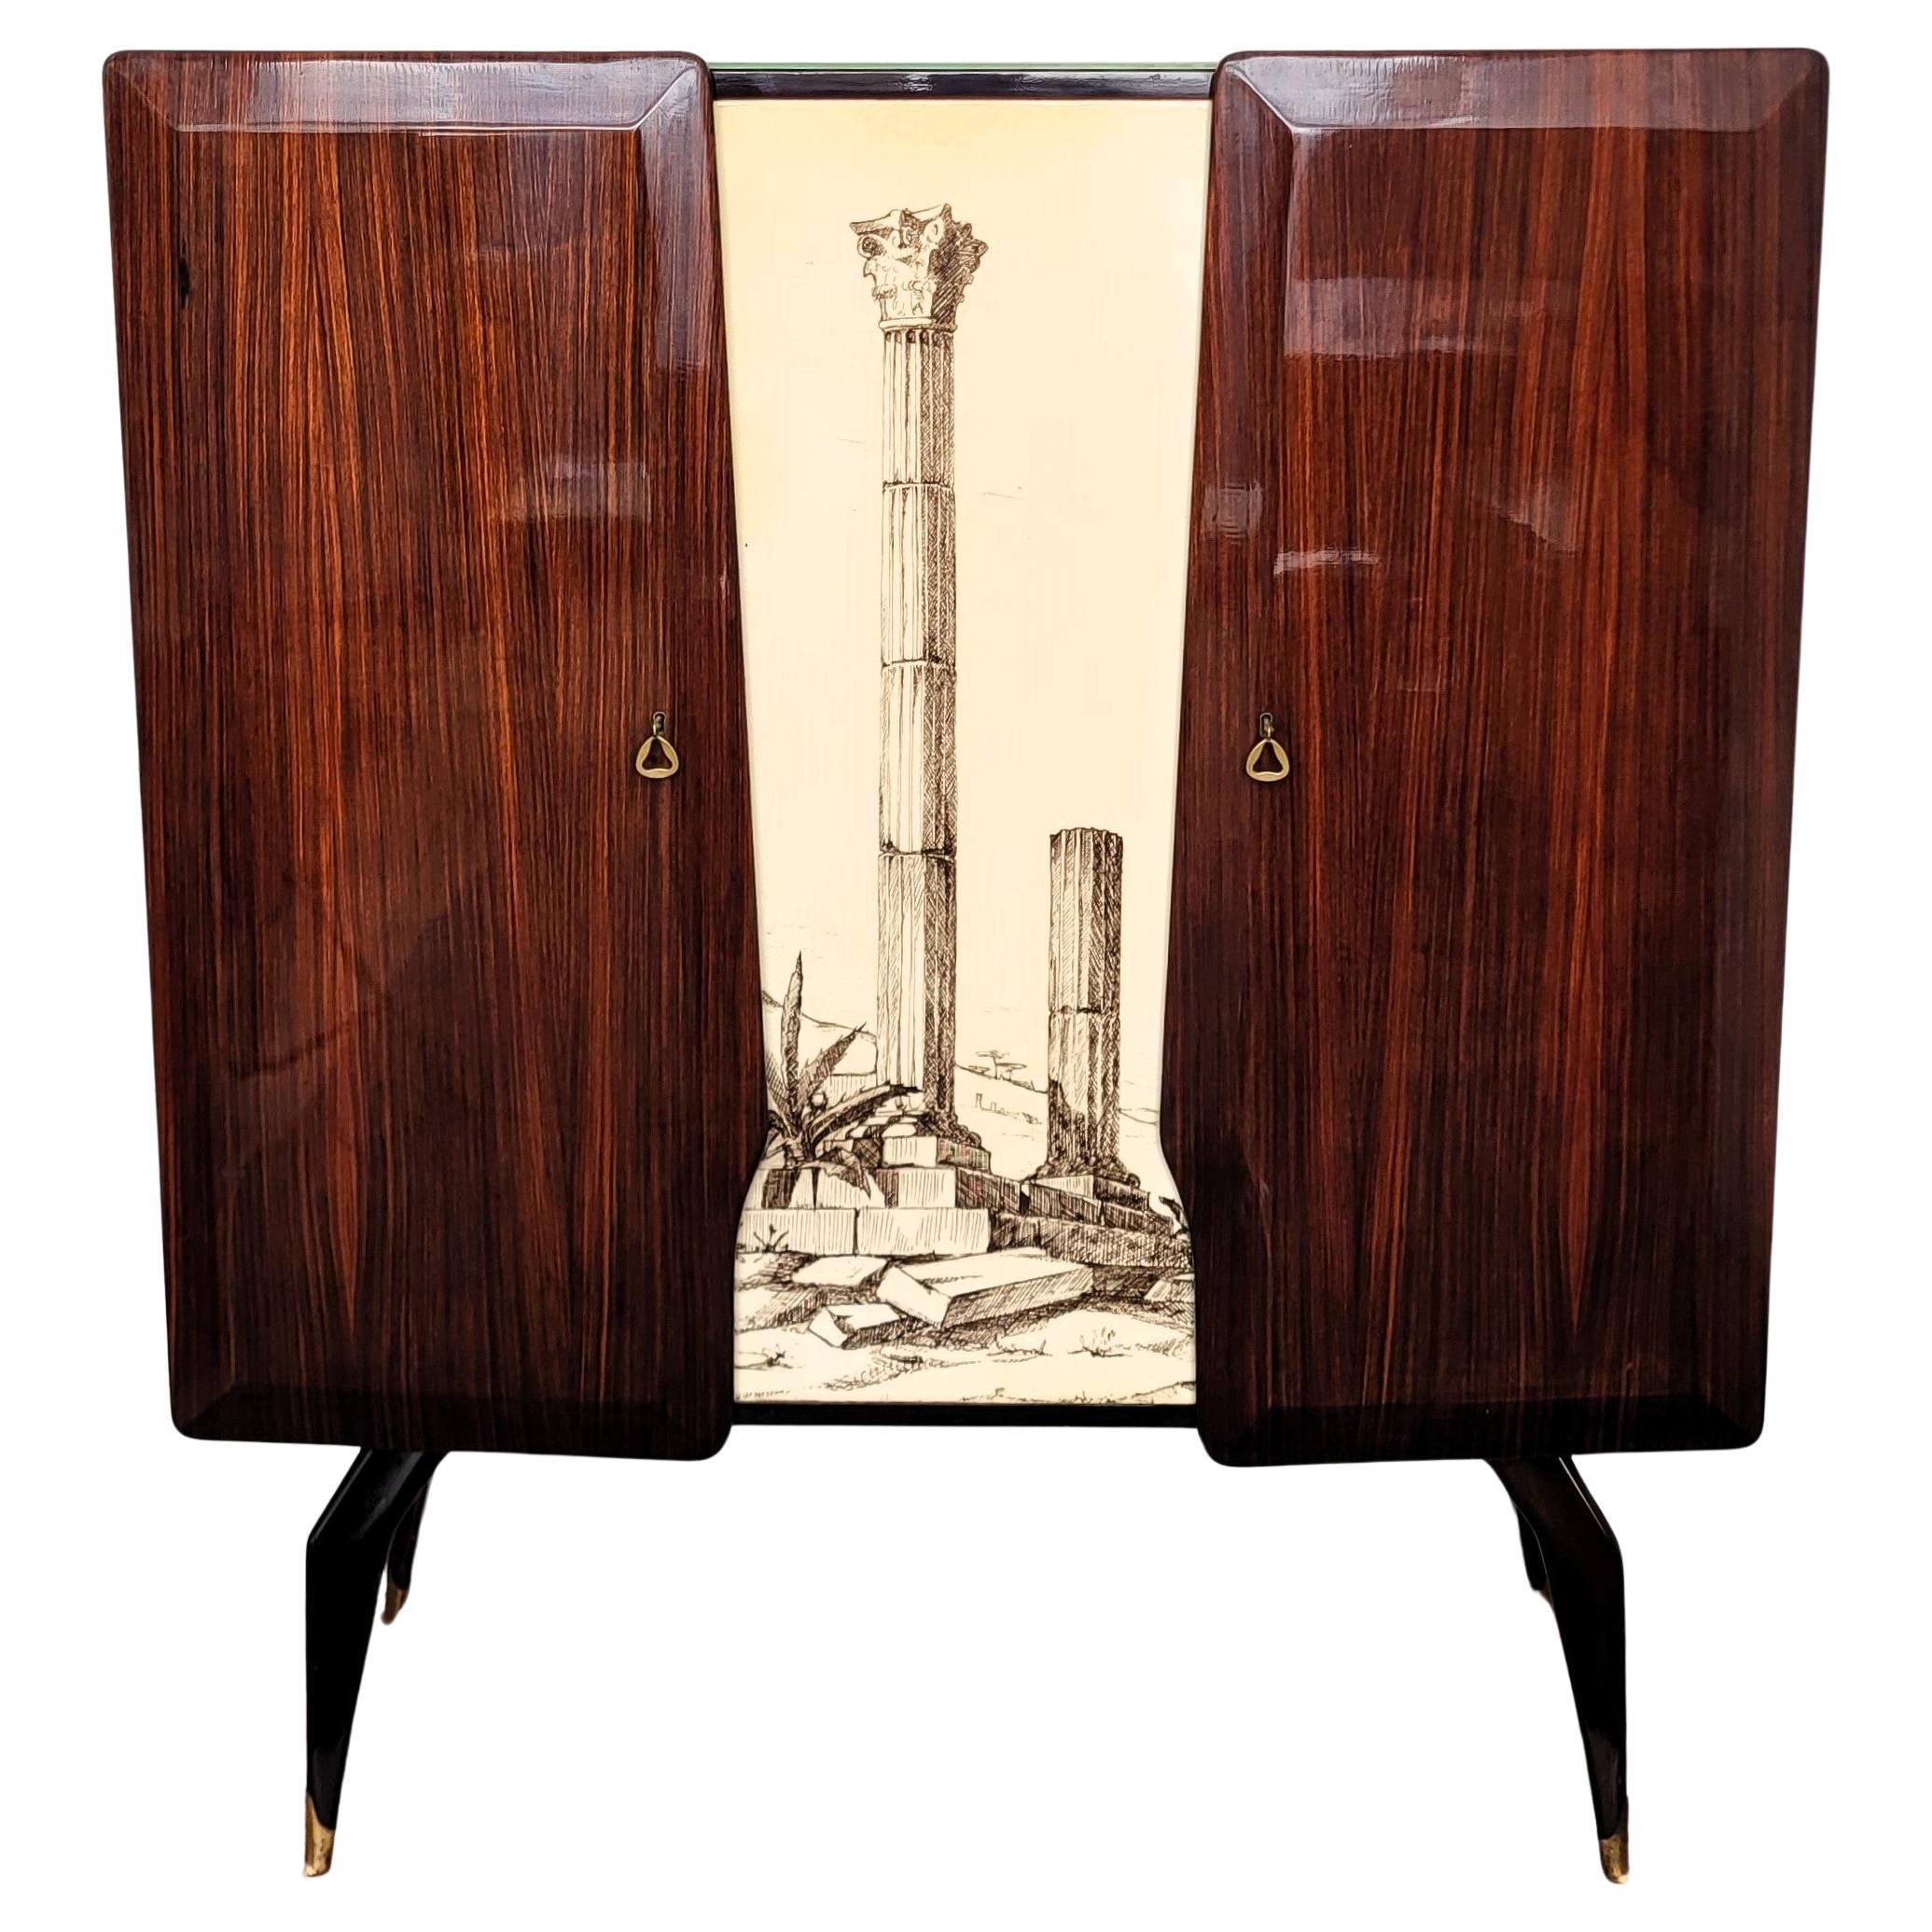 1960s Art Deco Midcentury Italian Tall Wood Brass Decorated Dry Bar Cabinet